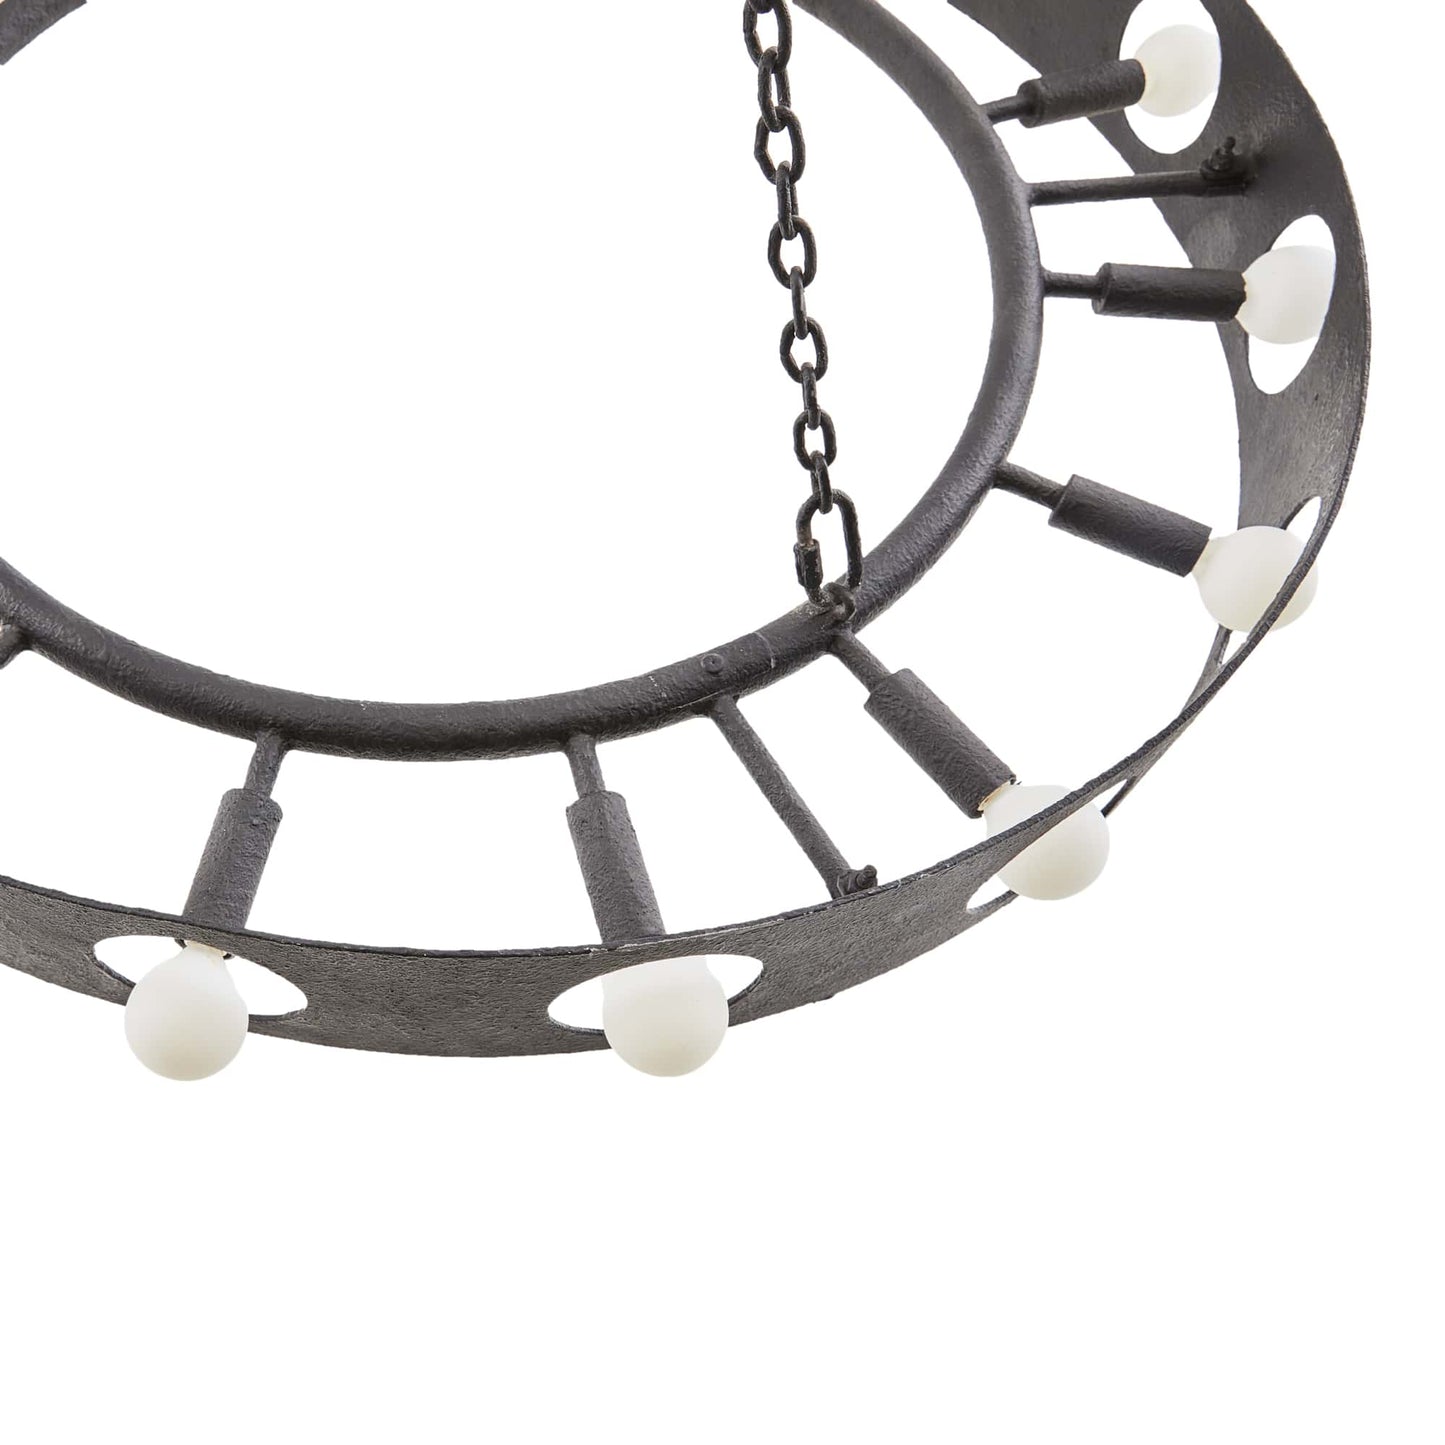 Redondo Chandelier - Brutalist Design with Textured Matte Charcoal Iron  - Cuffed Drum Silhouette